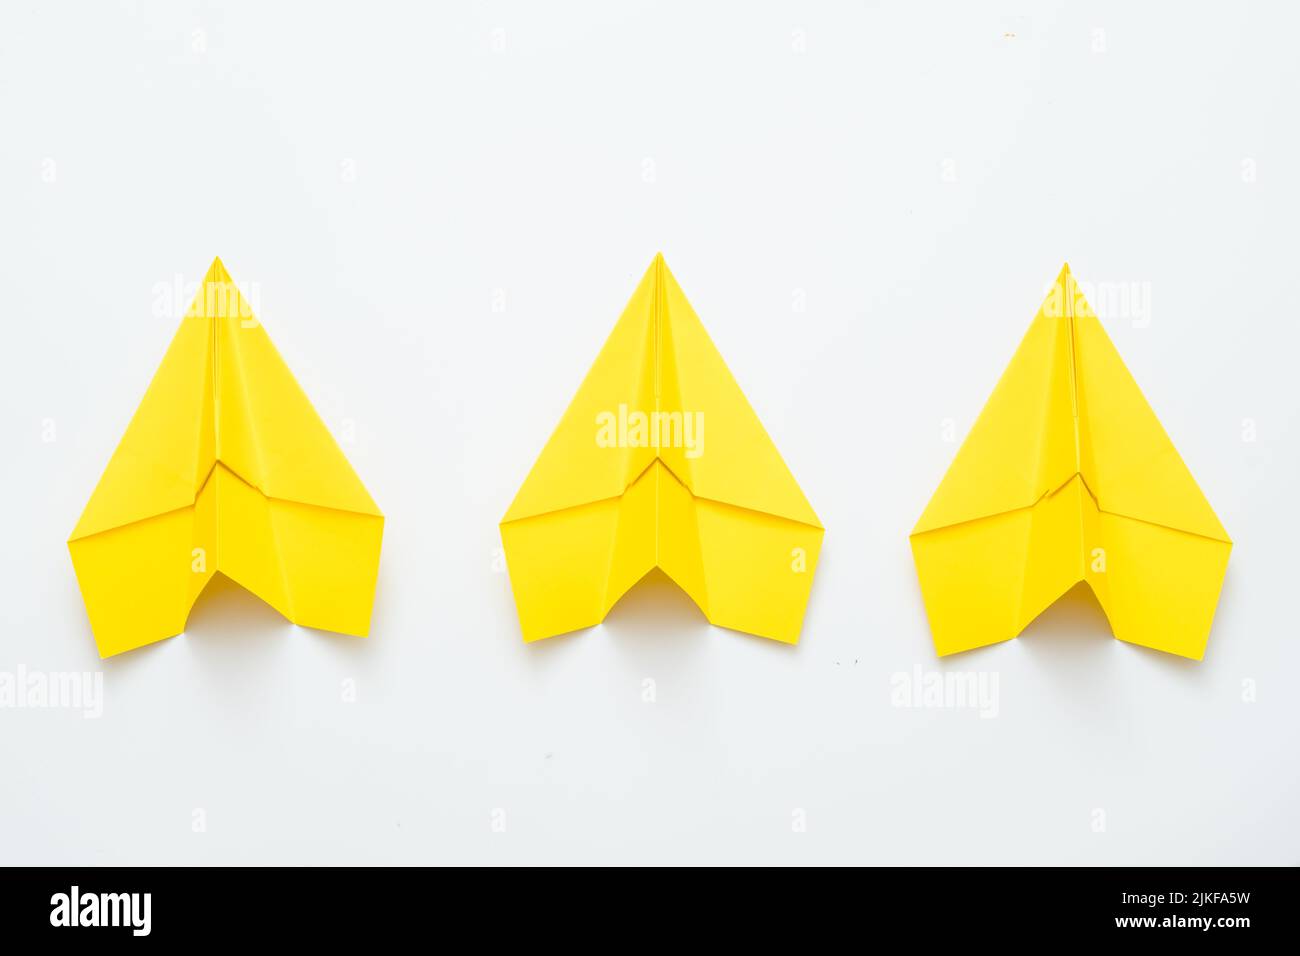 team spirit ambition three yellow paper airplanes Stock Photo